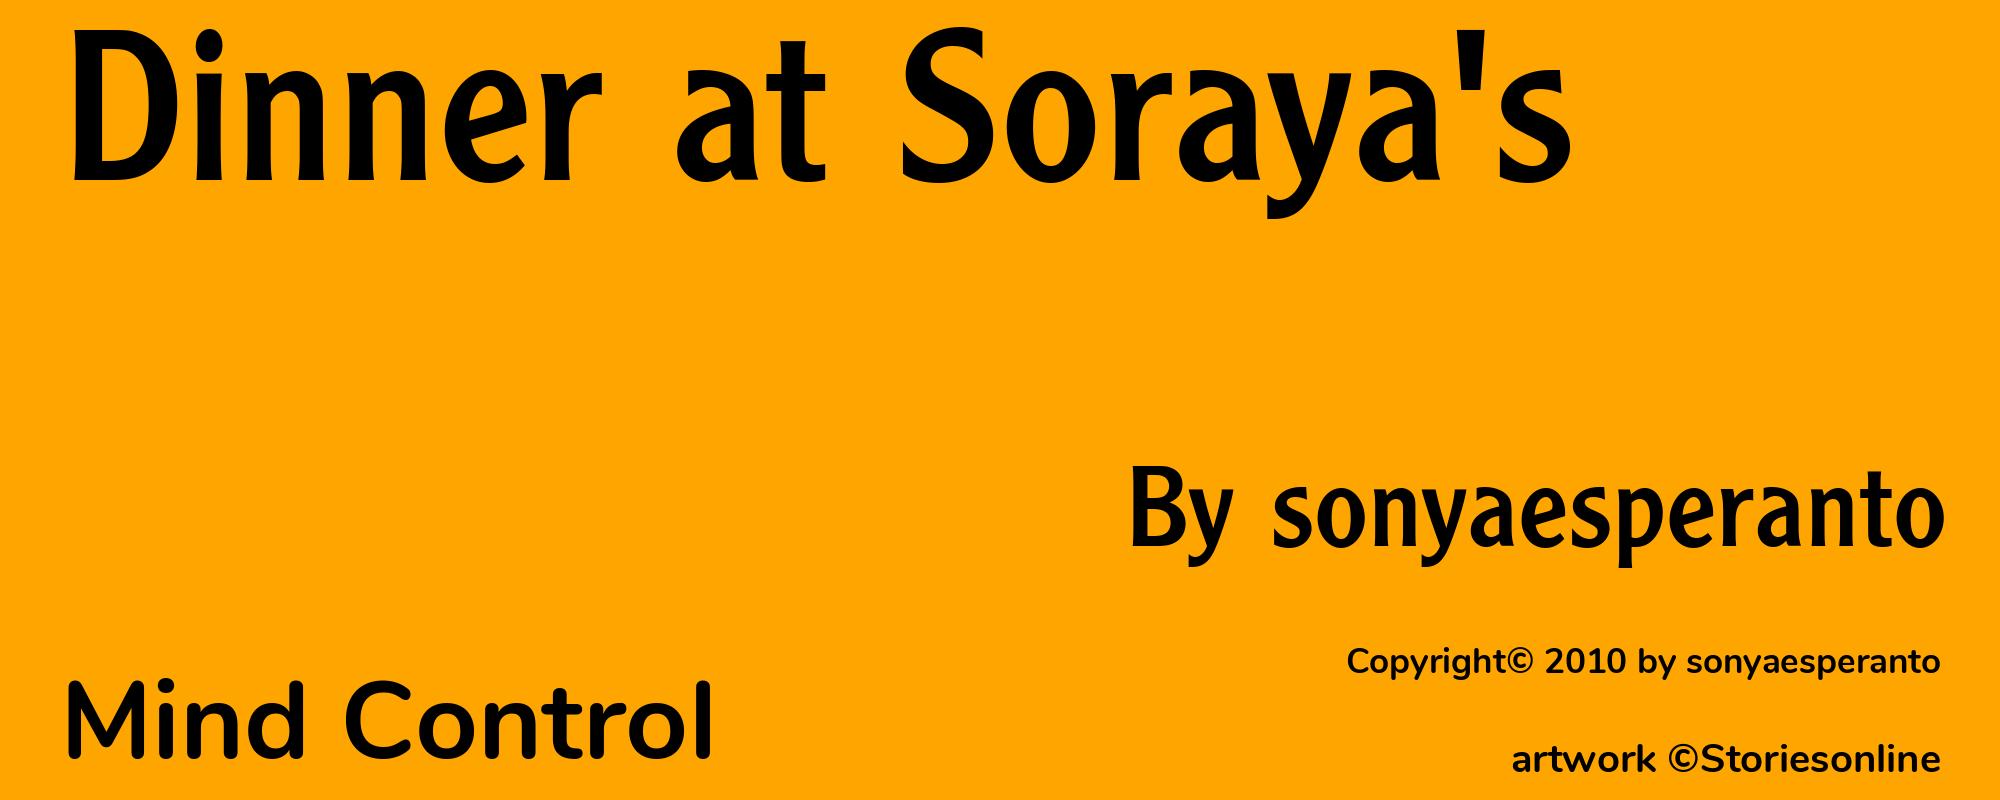 Dinner at Soraya's - Cover